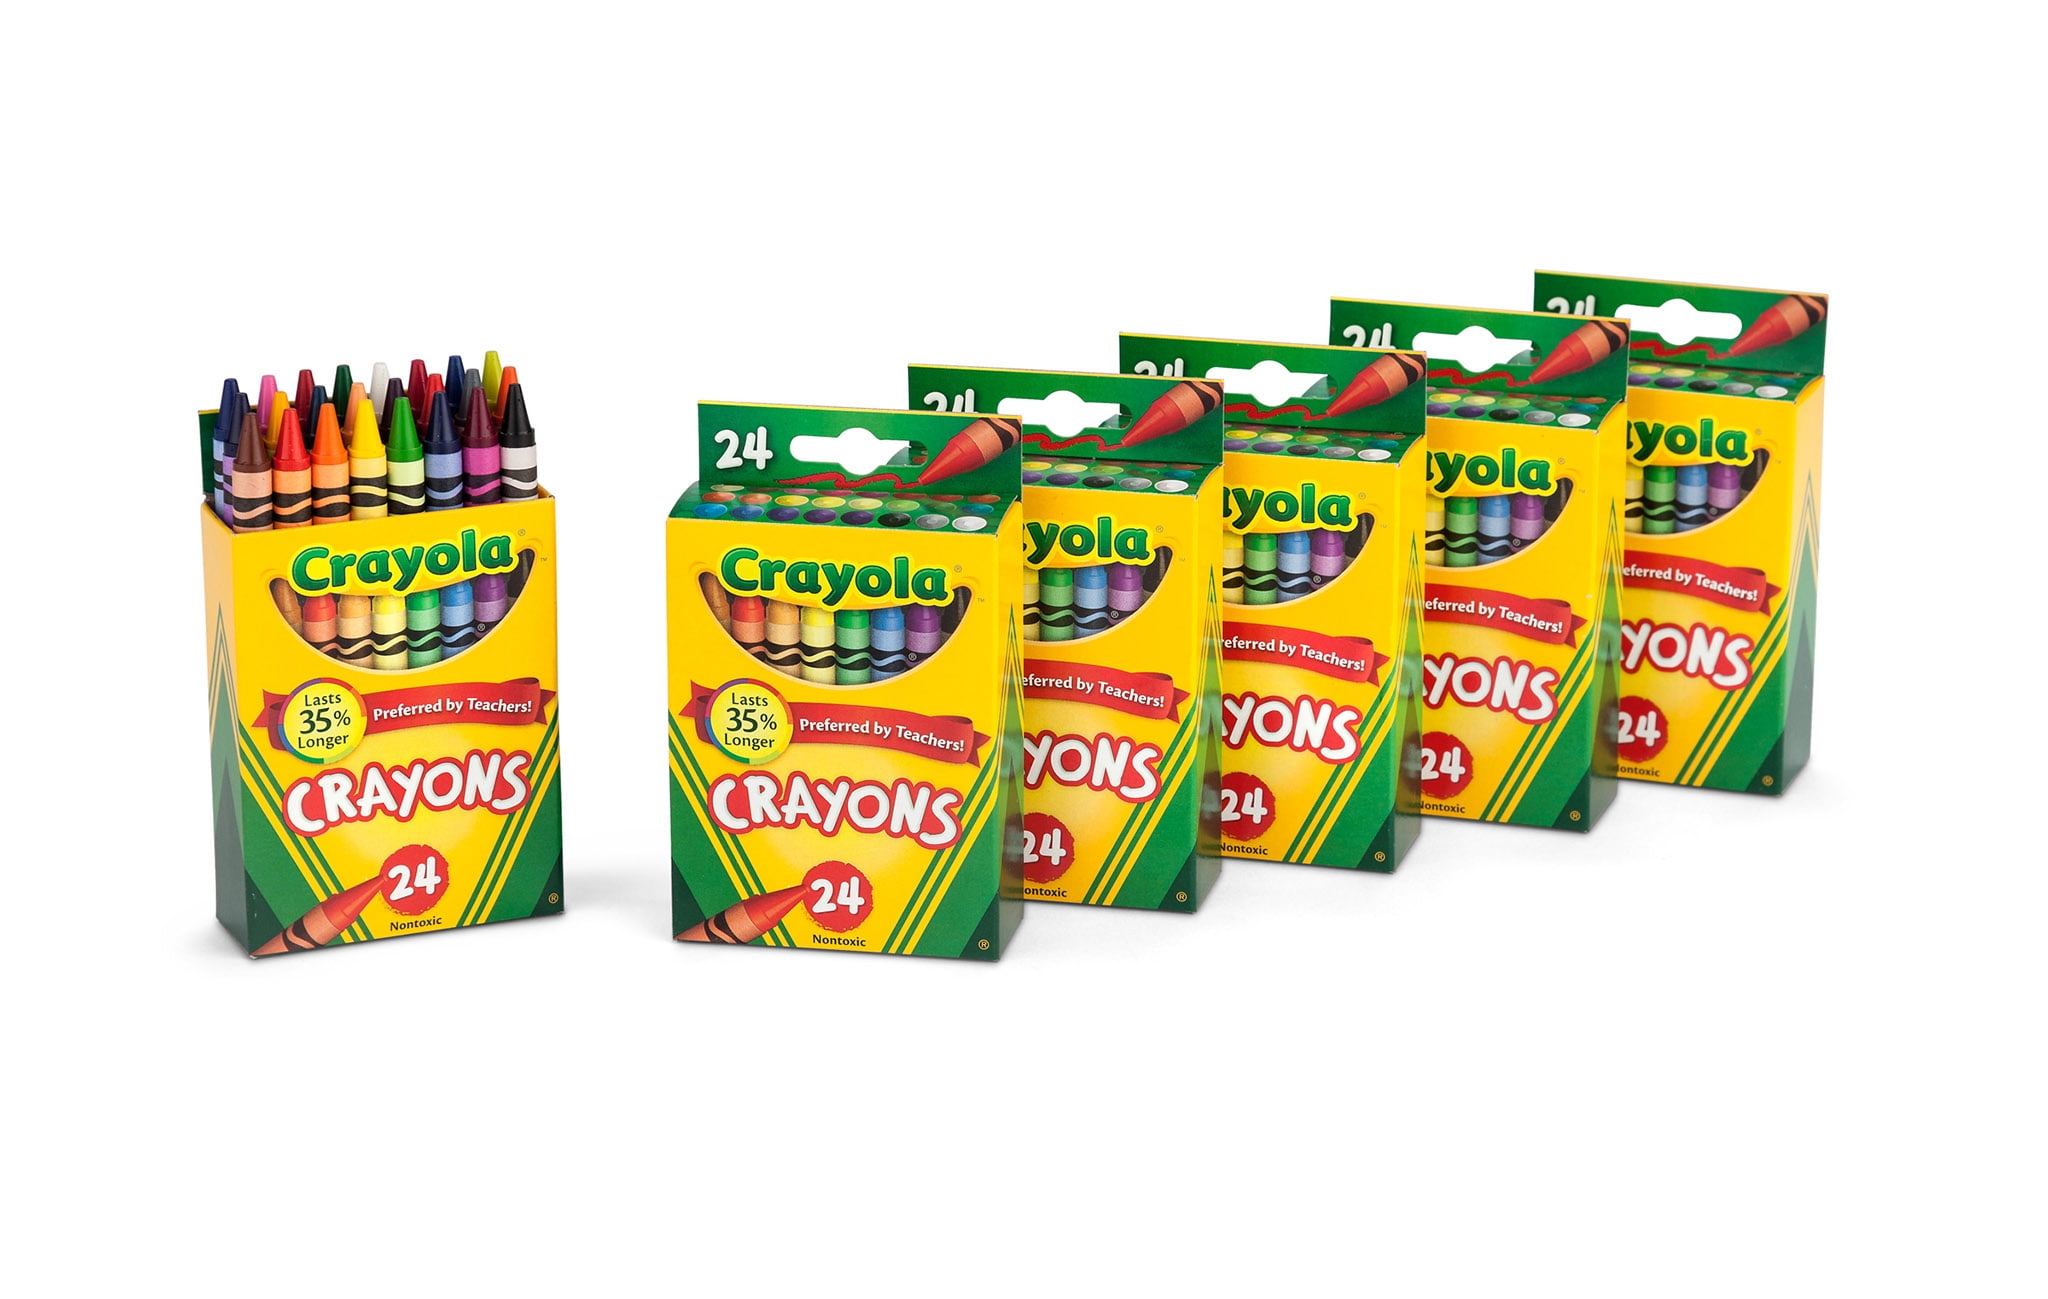 Crayola Crayons School Art Supplies Bulk 6 Pack of 24 Count